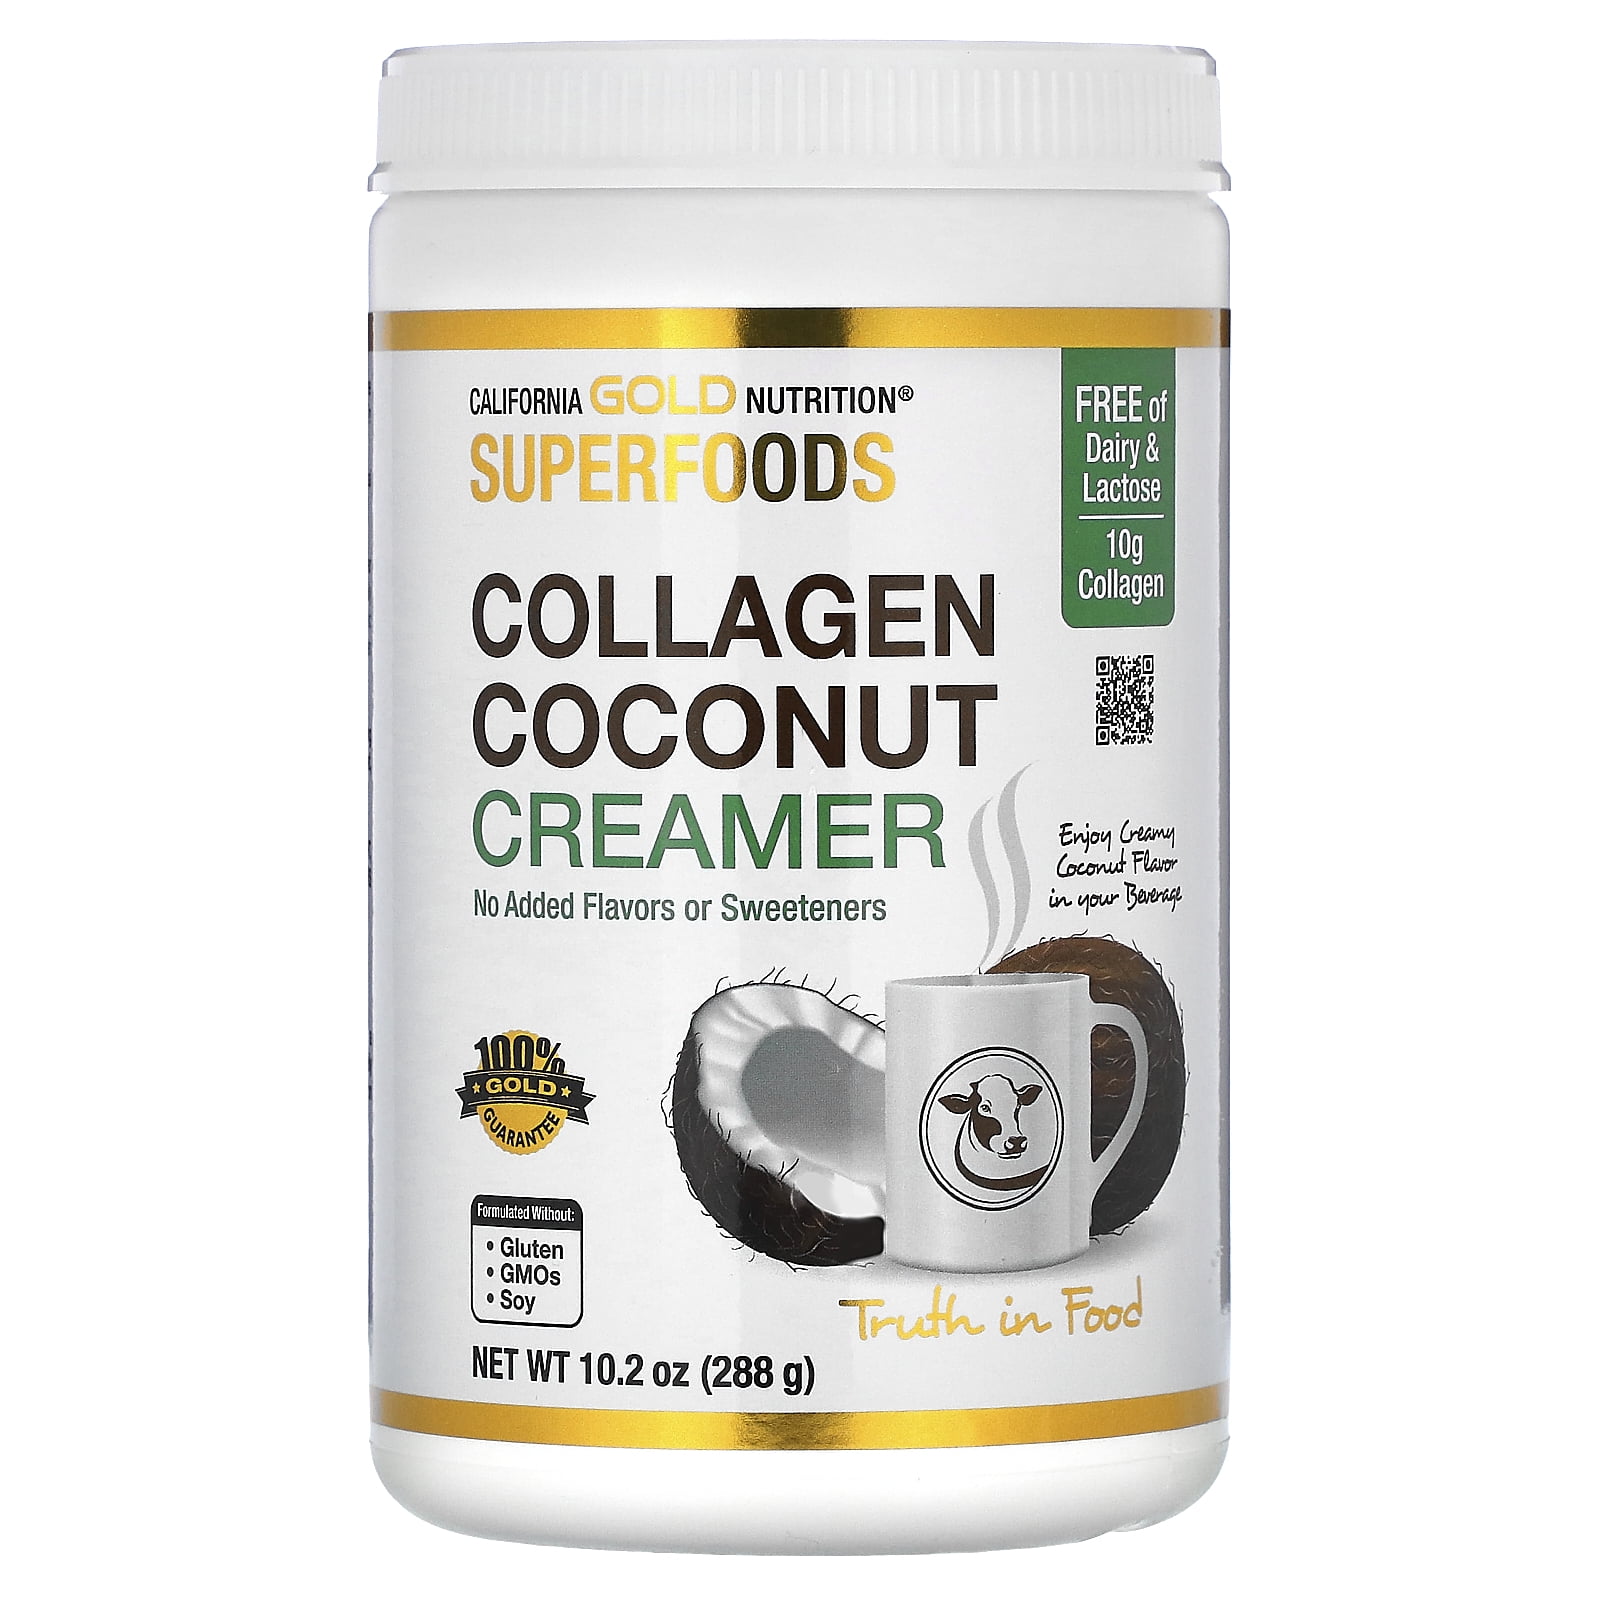 Orgain Collagen Creamer with Organic Oatmilk Powder, French Vanilla - 10g  of Hydrolyzed Grass-Fed Collagen, 1g